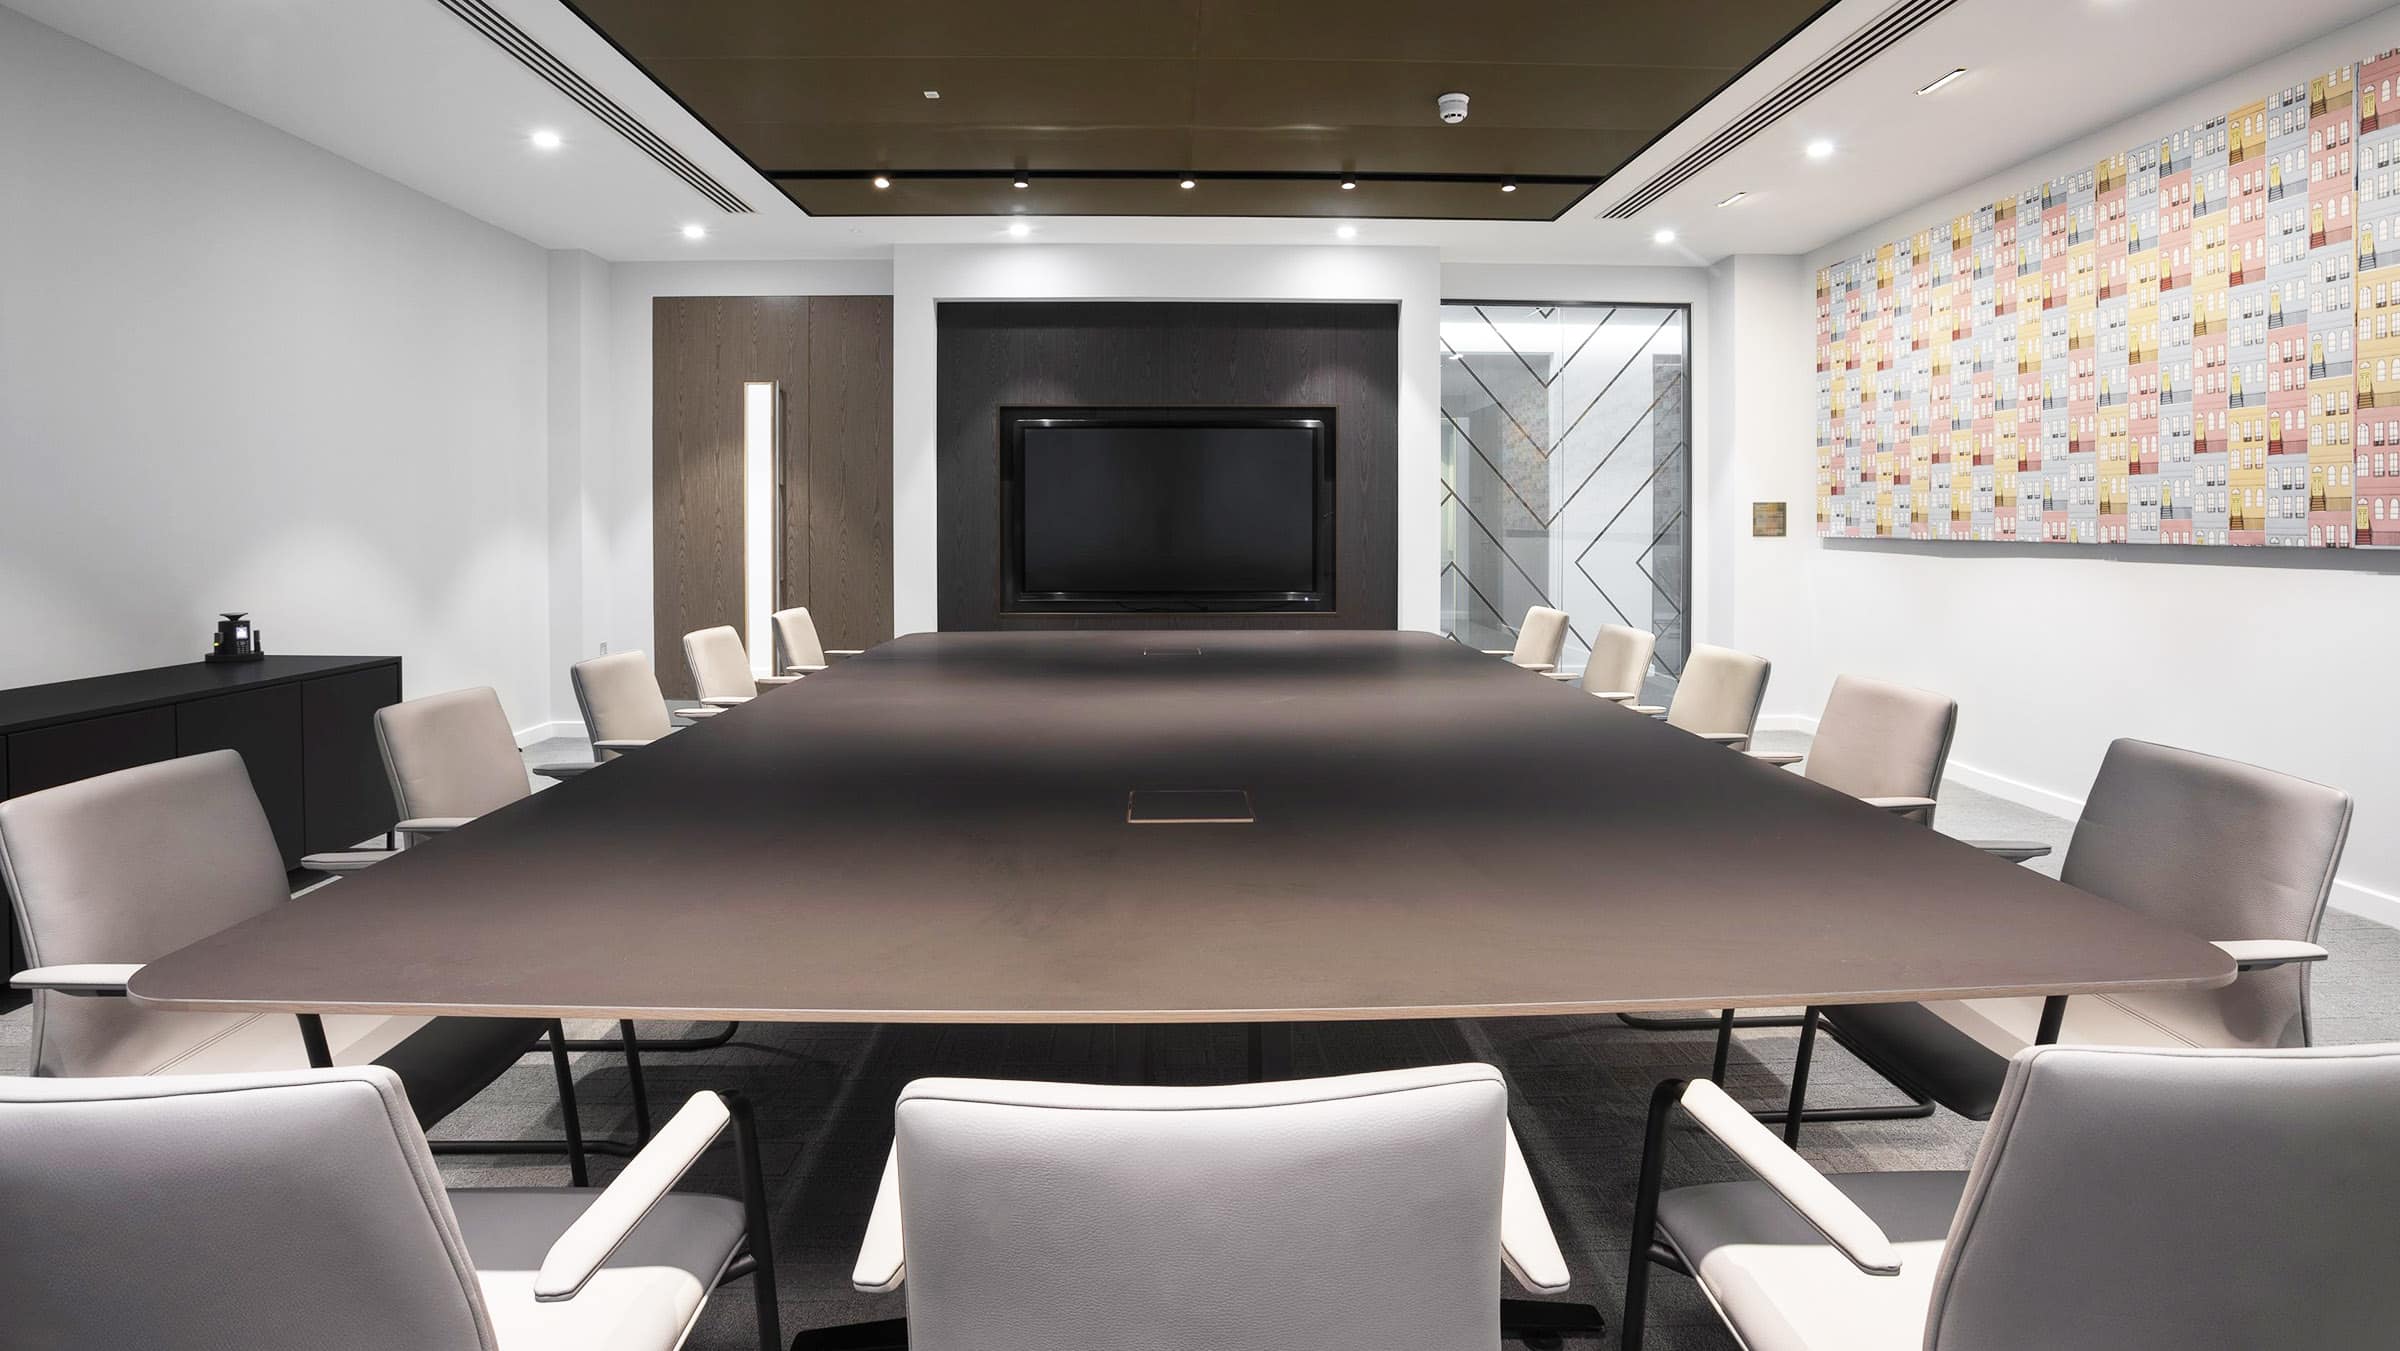 AV solutions for corporate boardrooms